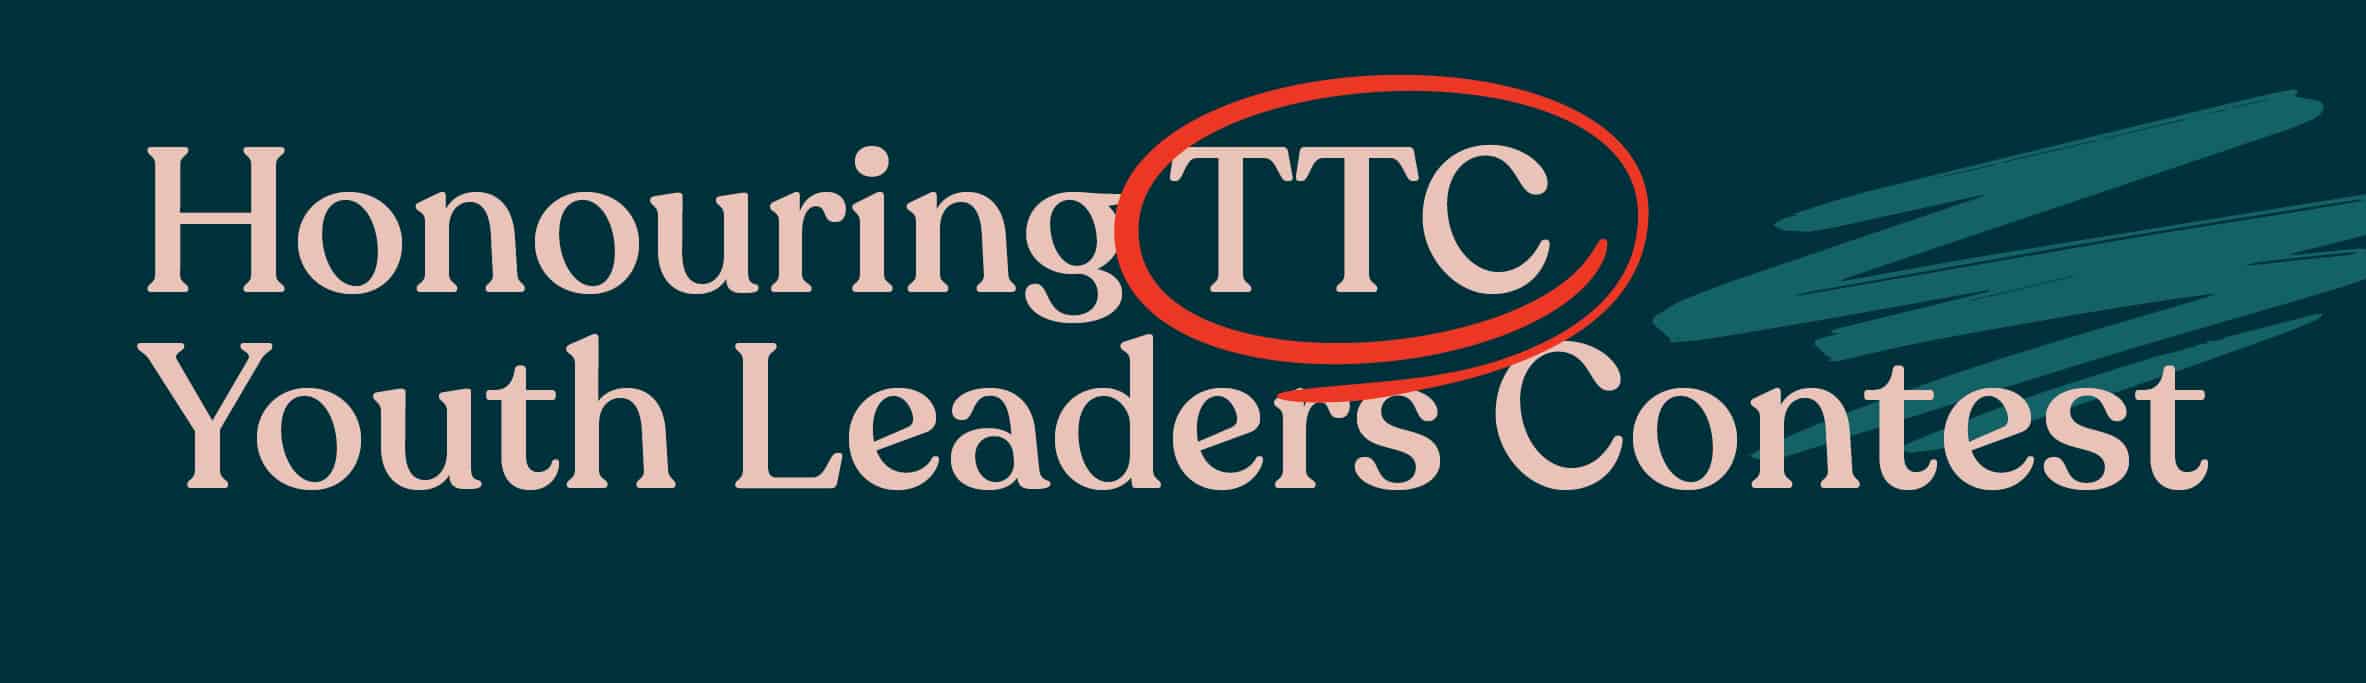 ttc-conference-banner